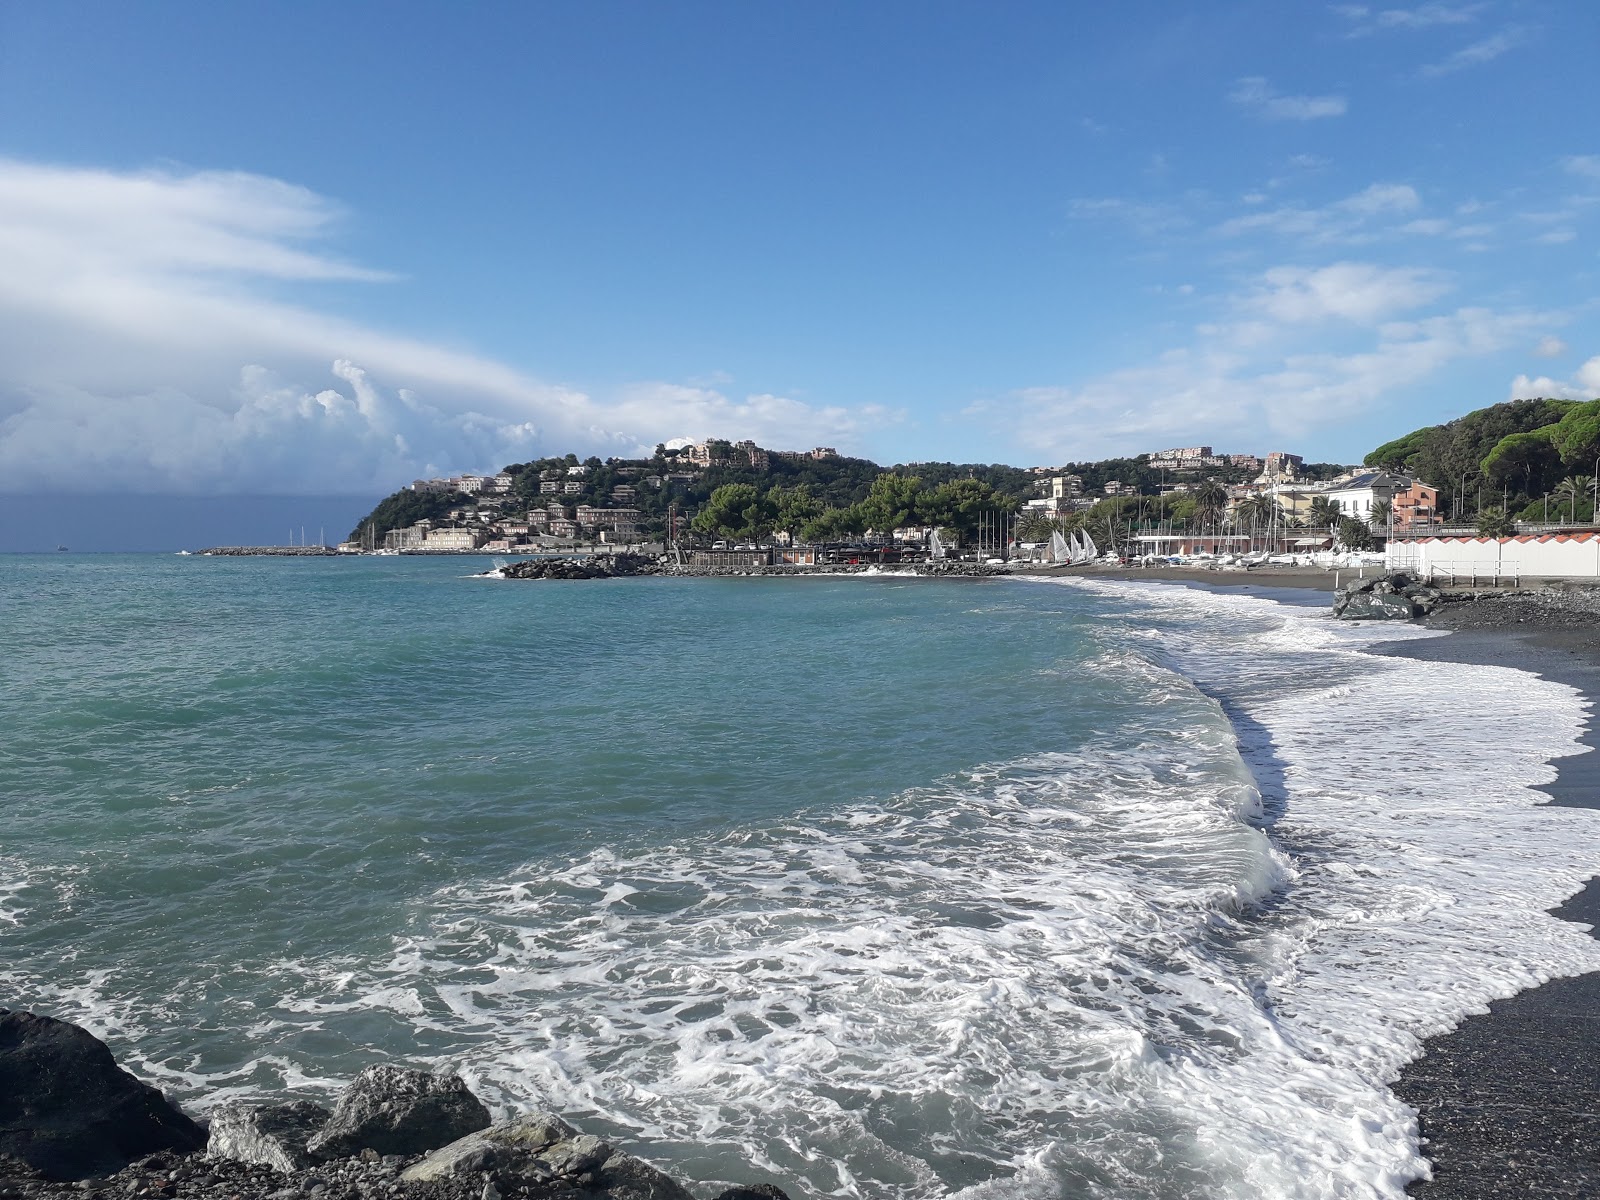 Photo of Spiaggia Olanda and the settlement